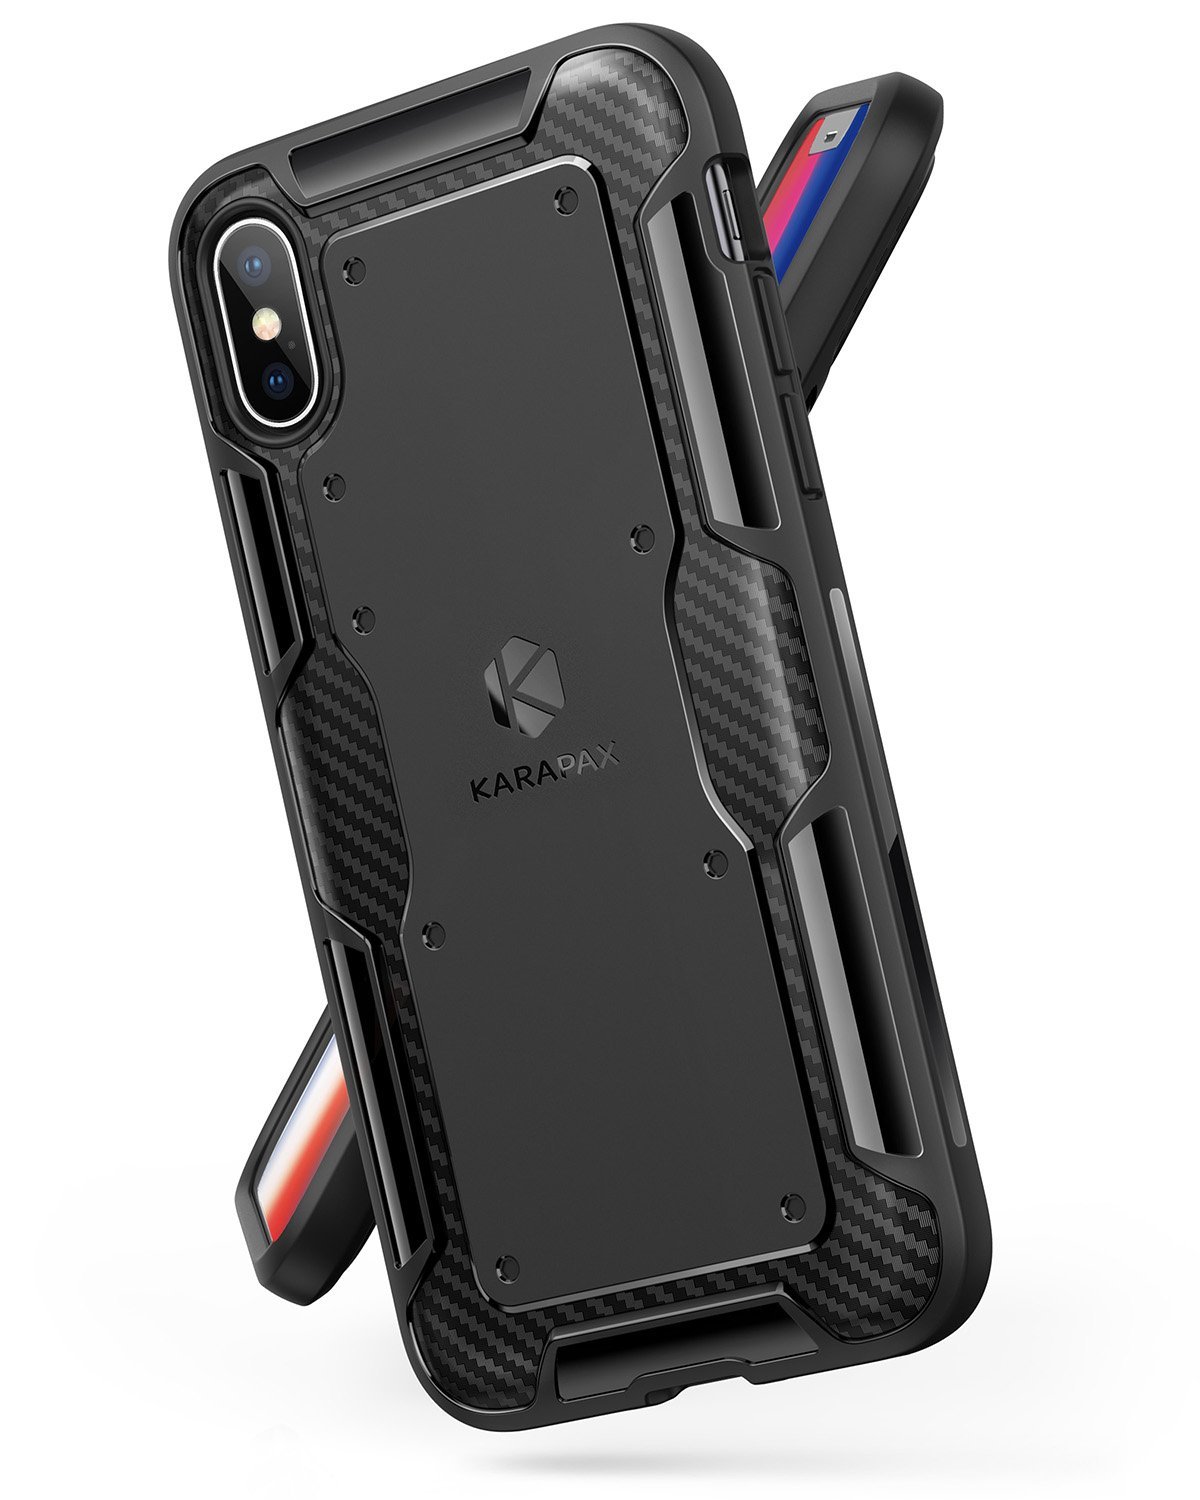 Anker Karapax Shield iPhone X case